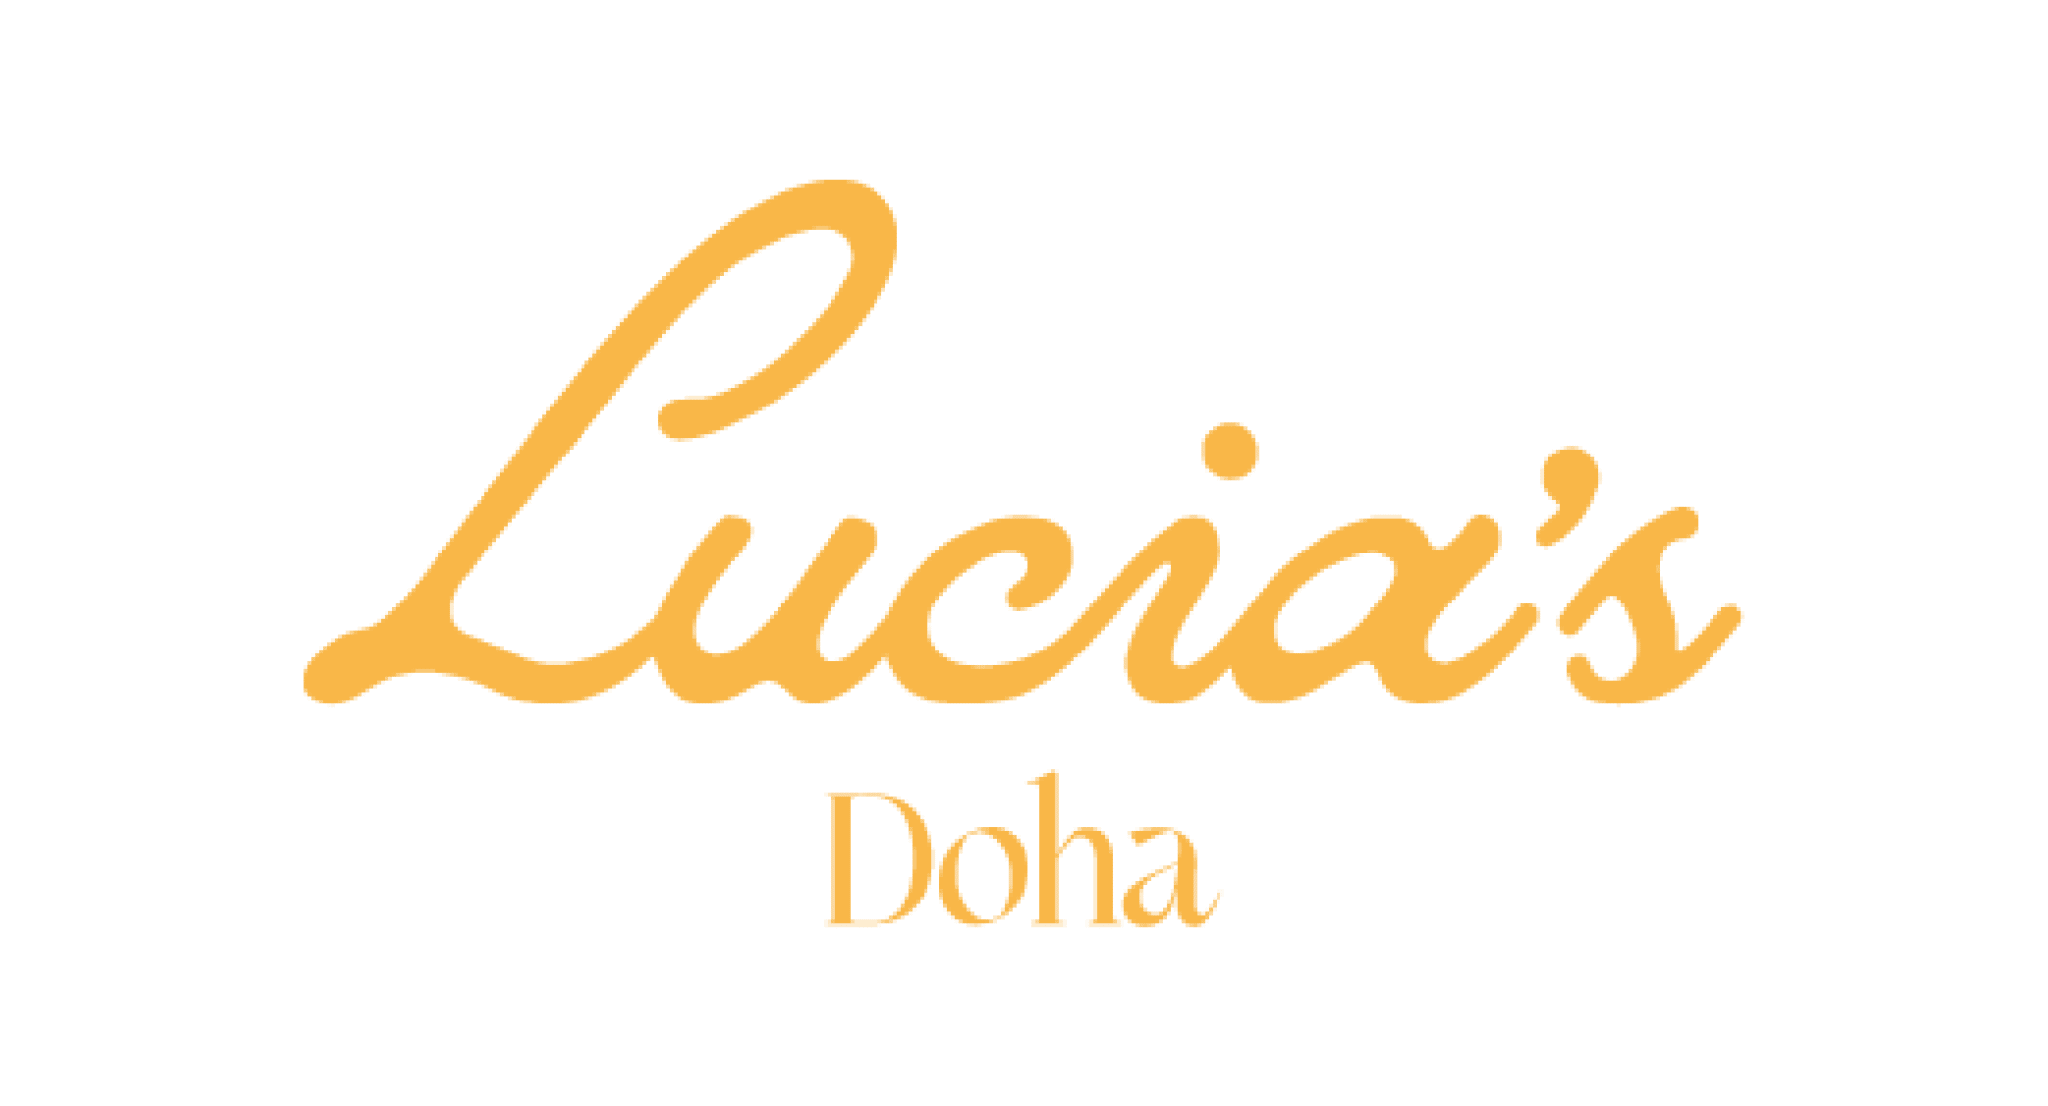 Lucia_s Doha